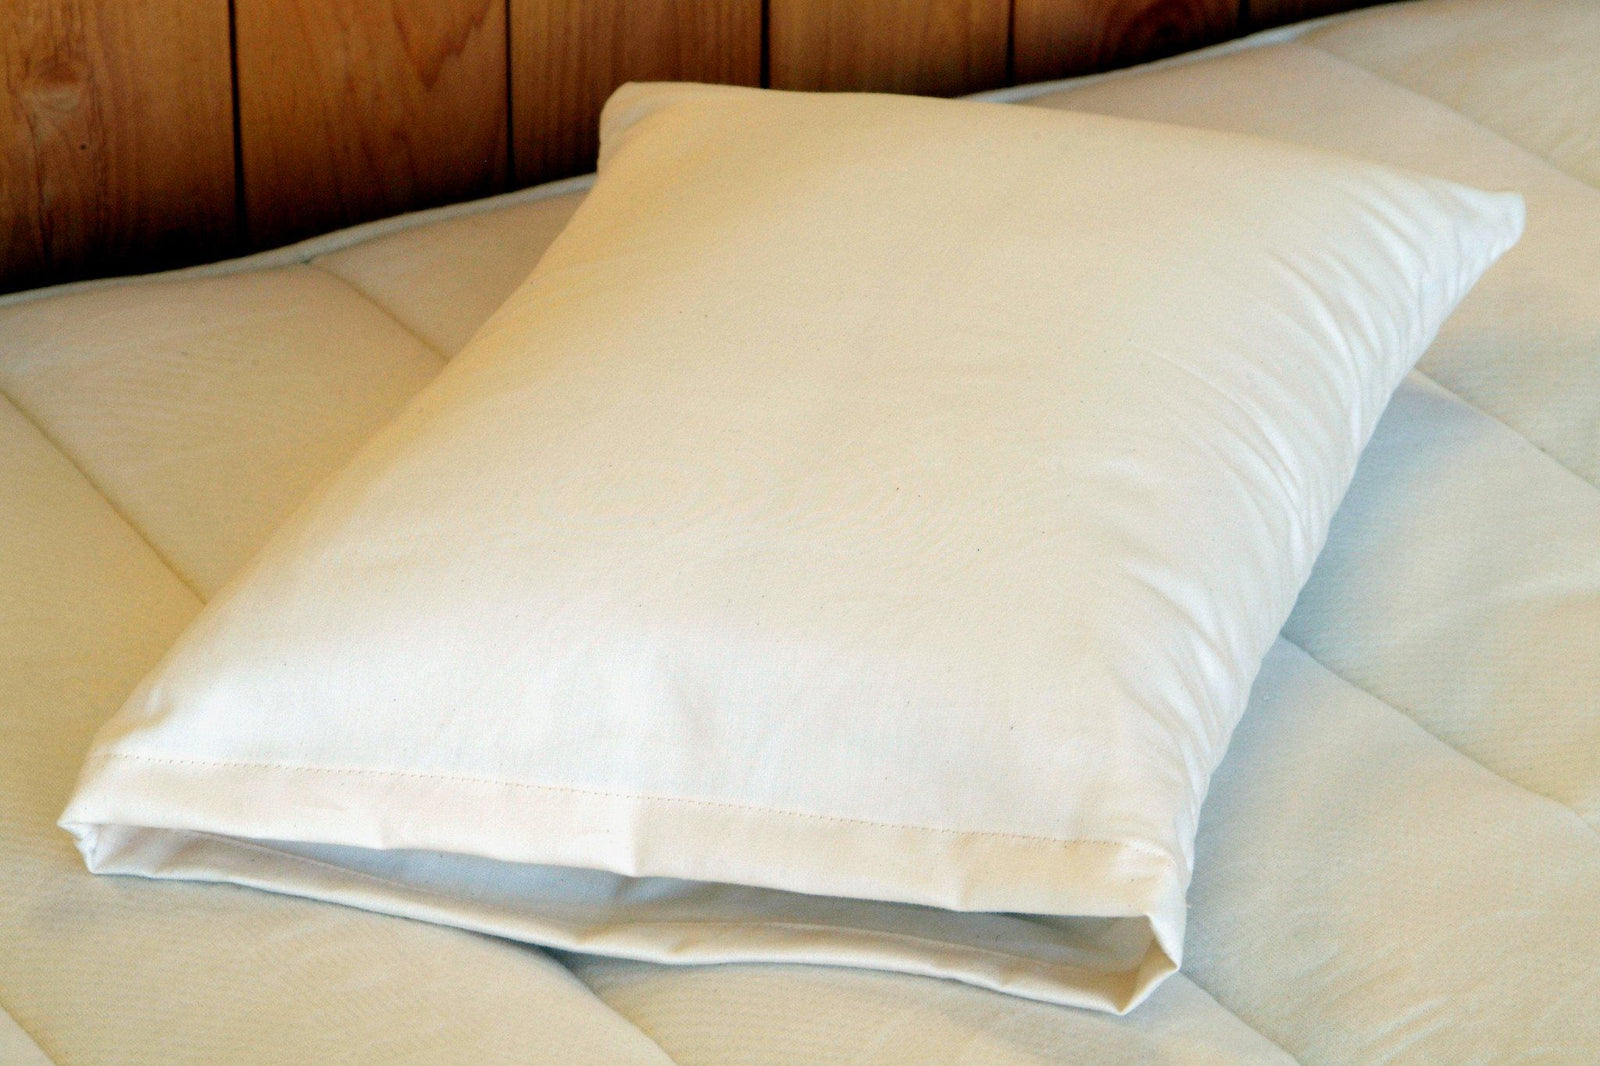 Wool-Filled Bed Pillows - Holy Lamb Organics